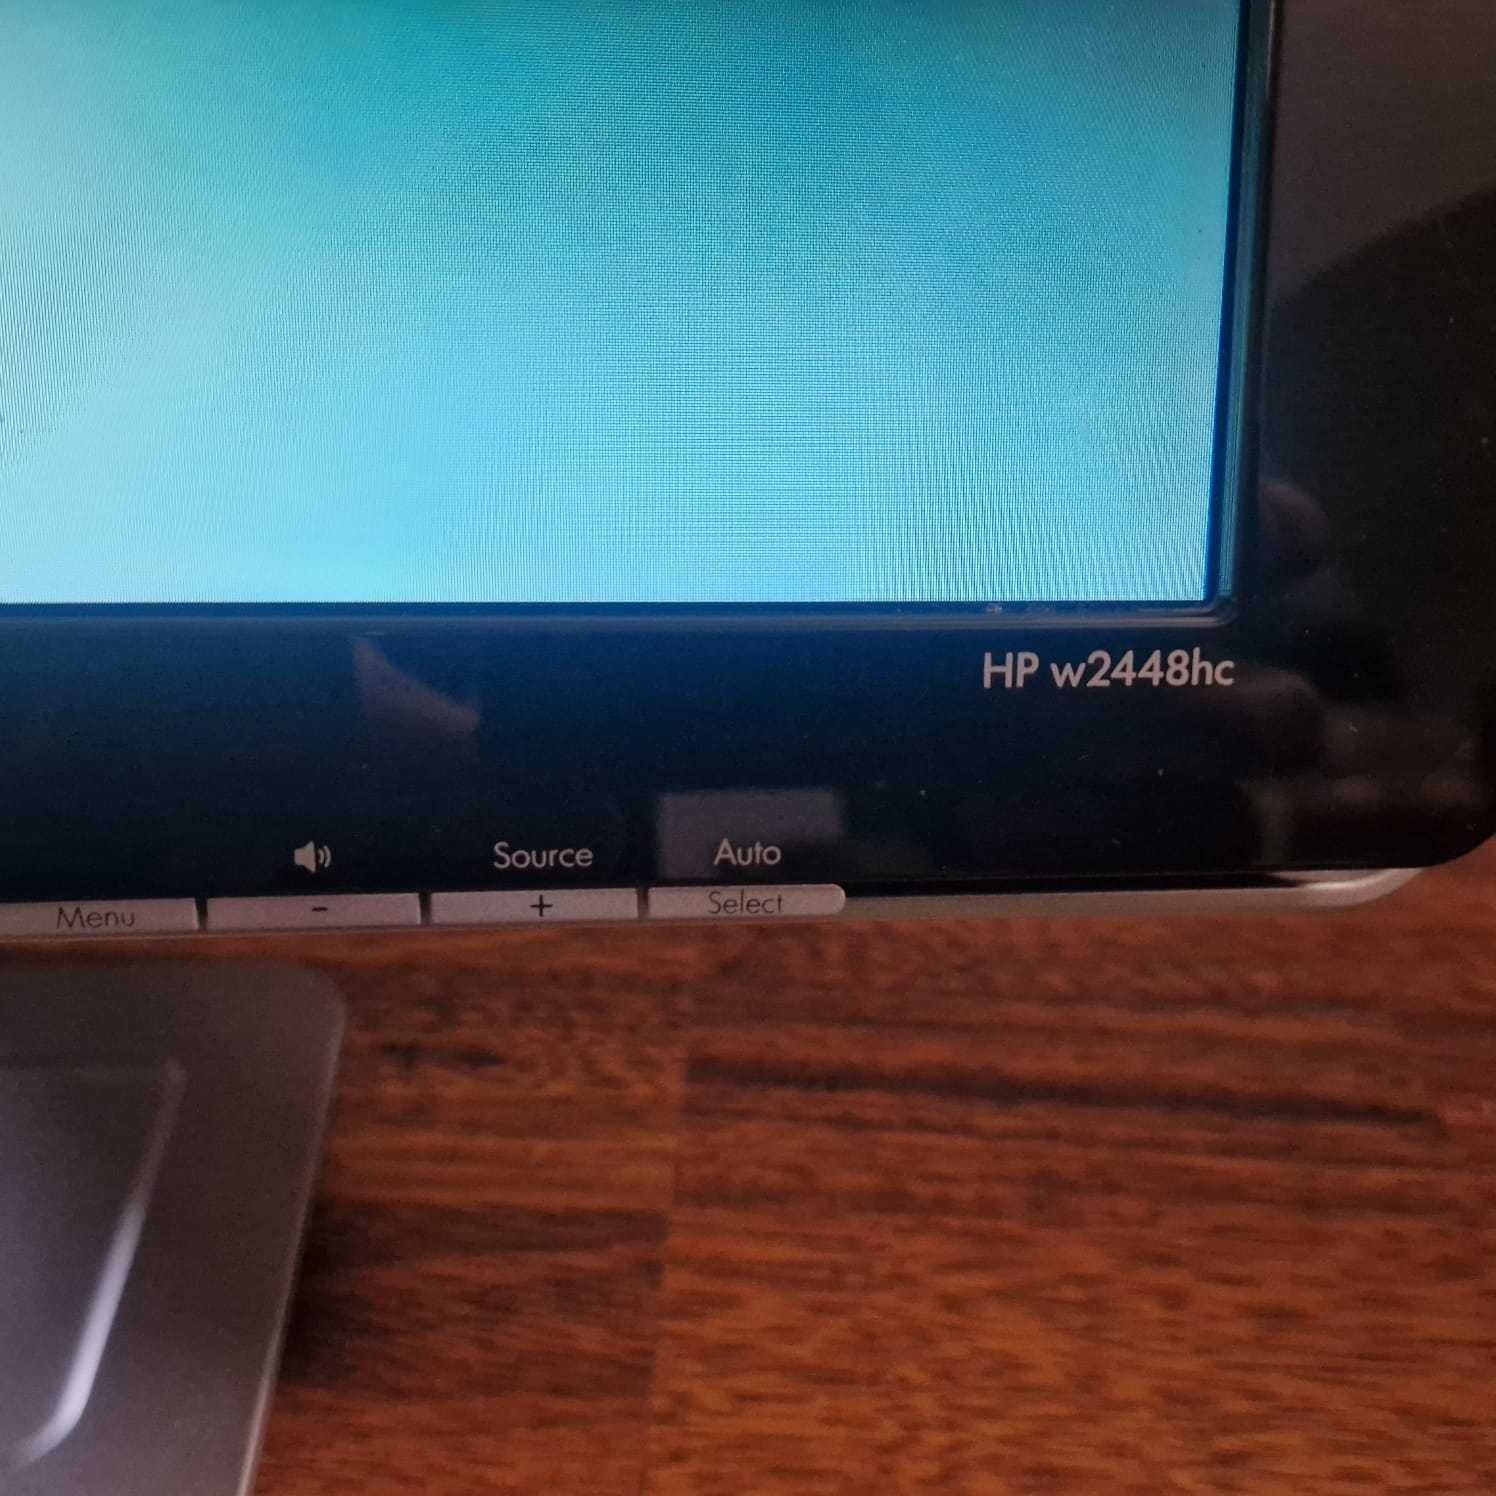 monitor komputerowy telewizor DVBT HP W2448hc - 24cale - PC